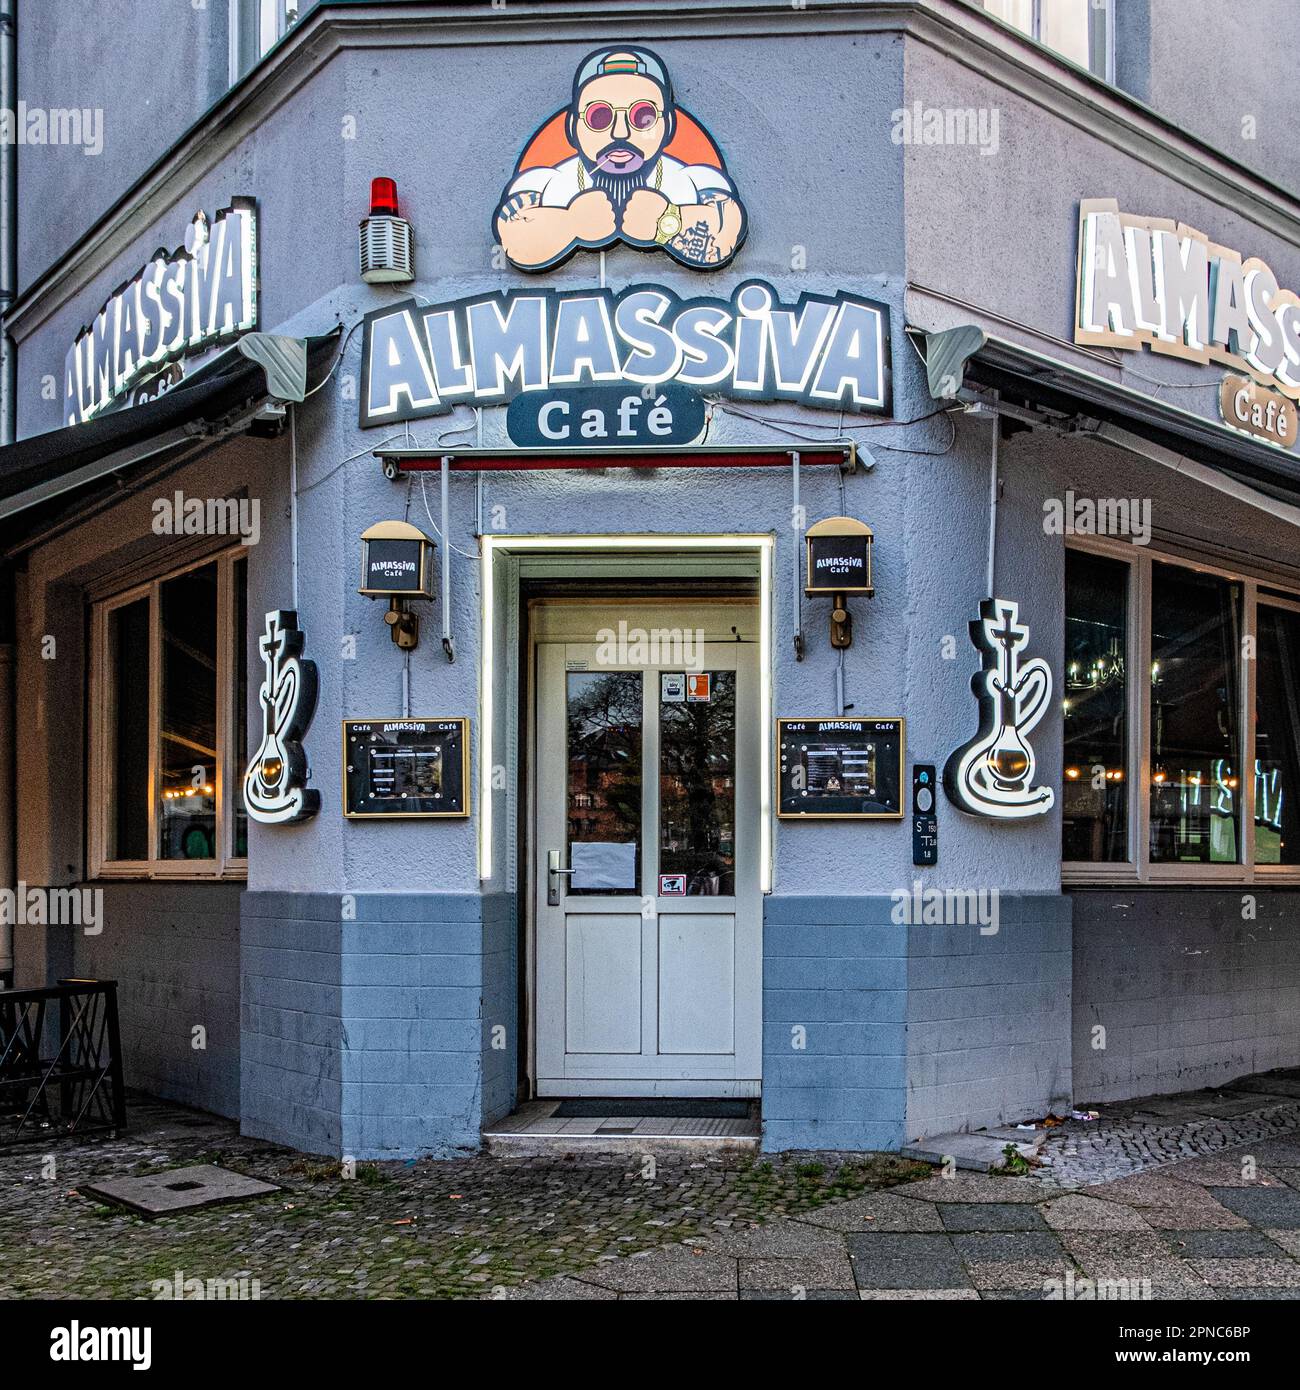 Al Massiva Cafe & Shisha Bar, Föhrer Str. 7, Wedding,Mitte,Berlin,Germany Stock Photo